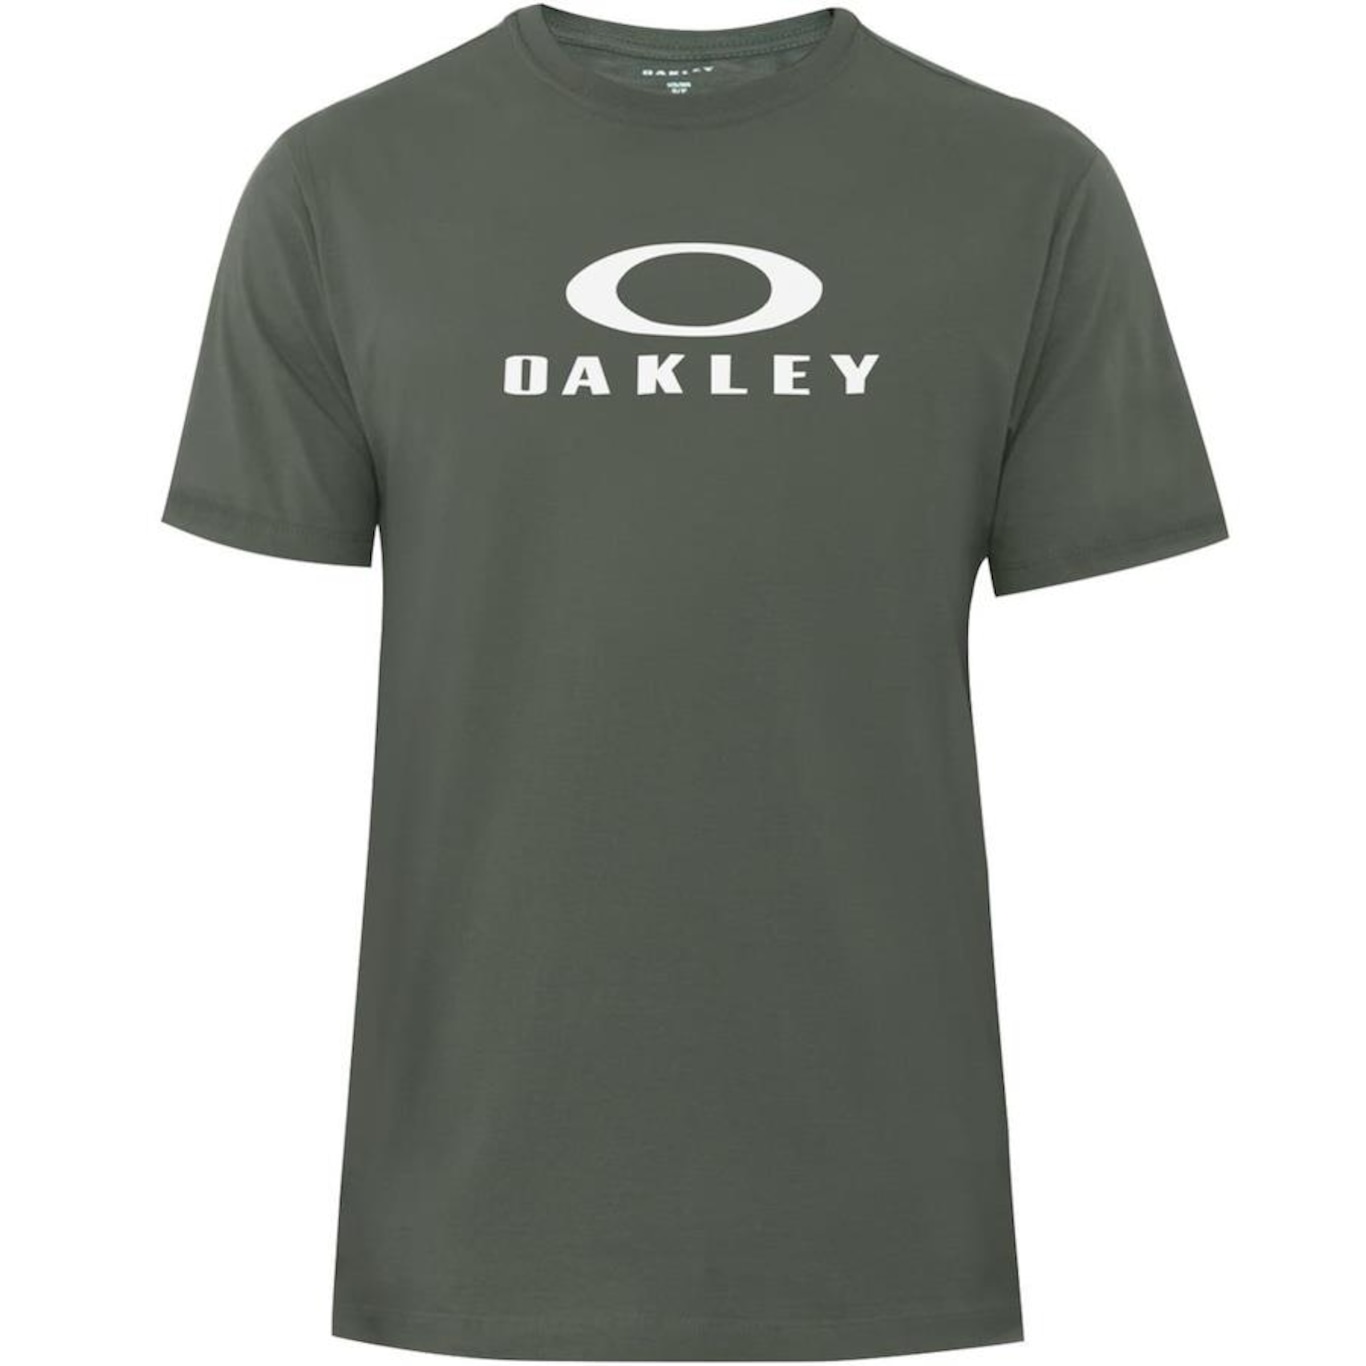 Camisetas Oakley Originais Antigas